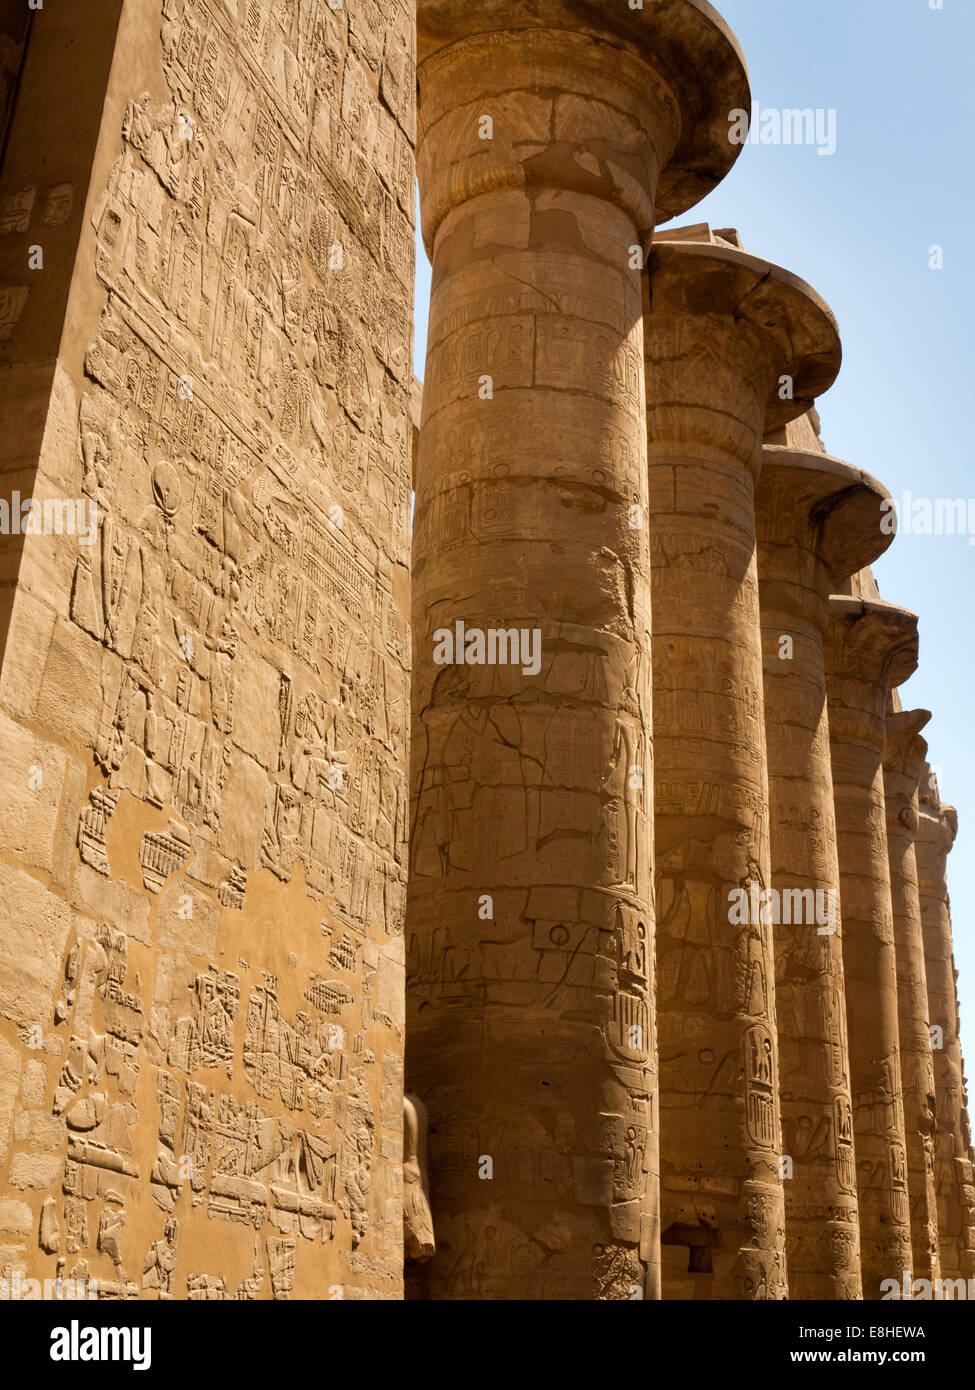 Egypt, Luxor, Karnak Temple, columns of Great Hypostyle Hall Stock Photo